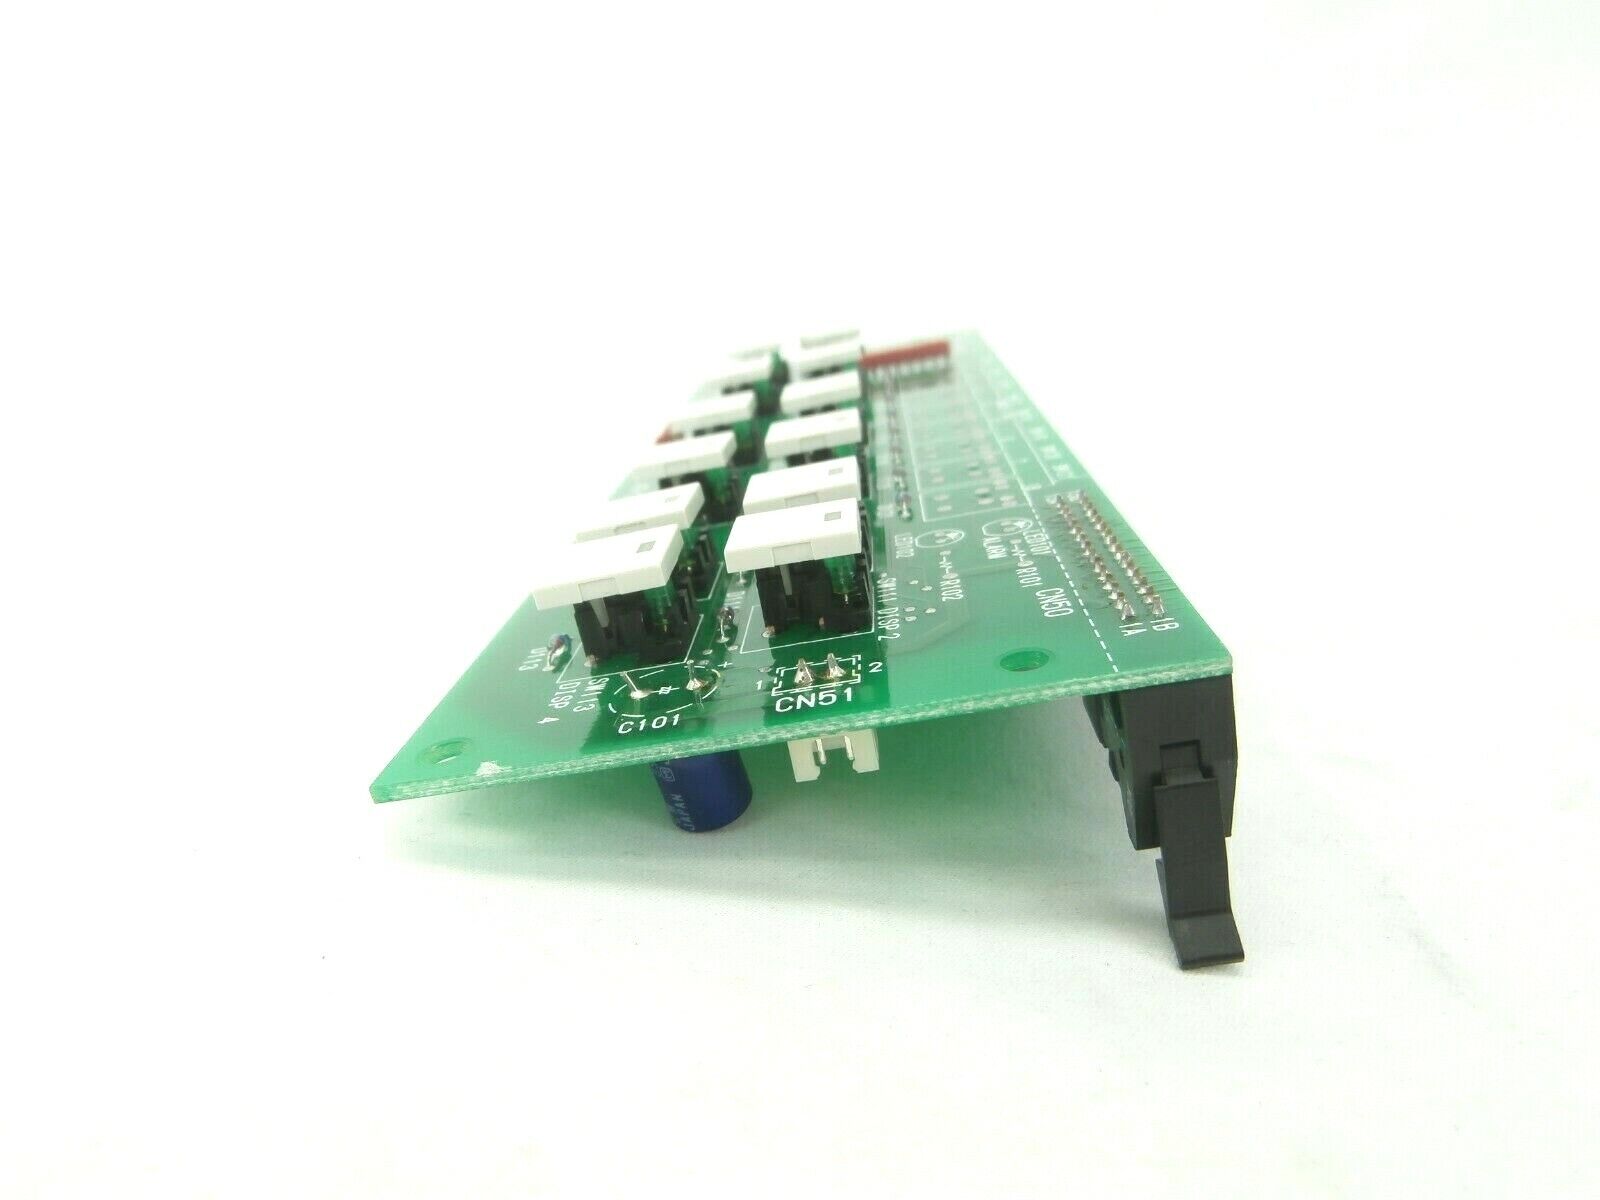 Hiranuma Sangyo 230132 AS-200 Switch Board Keypad PCB Assembly Working Spare